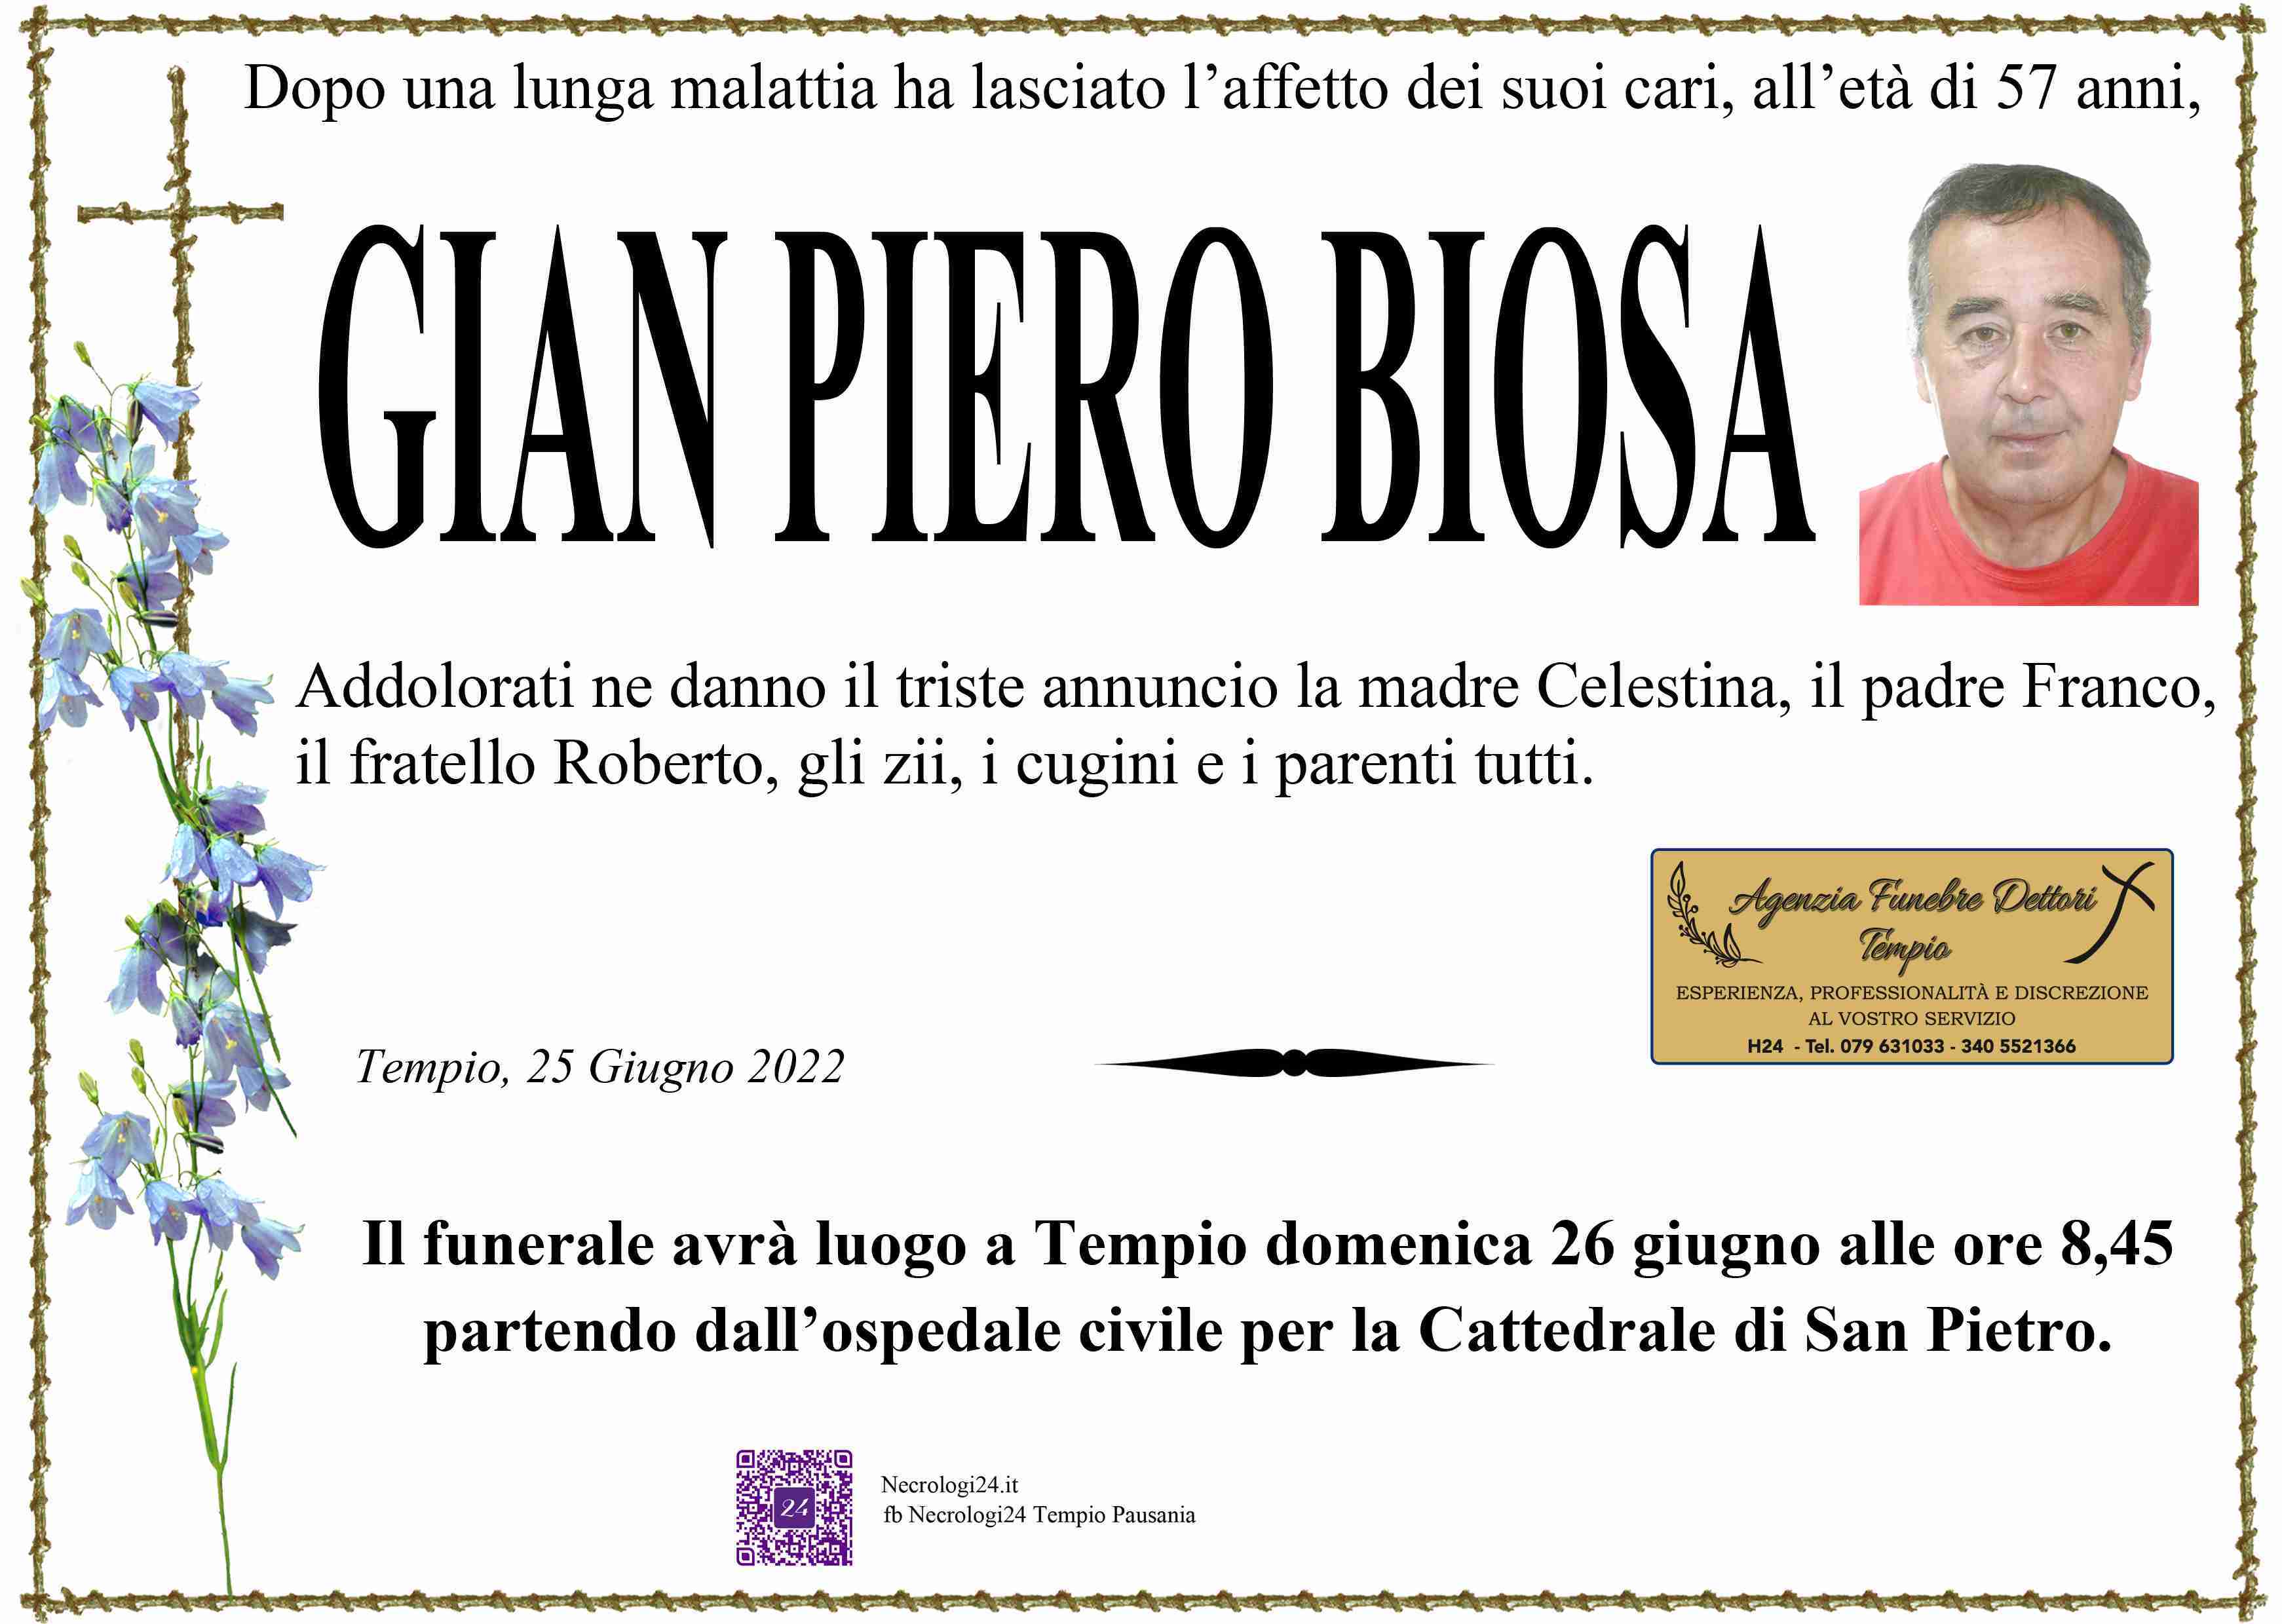 Gian Pietro Biosa